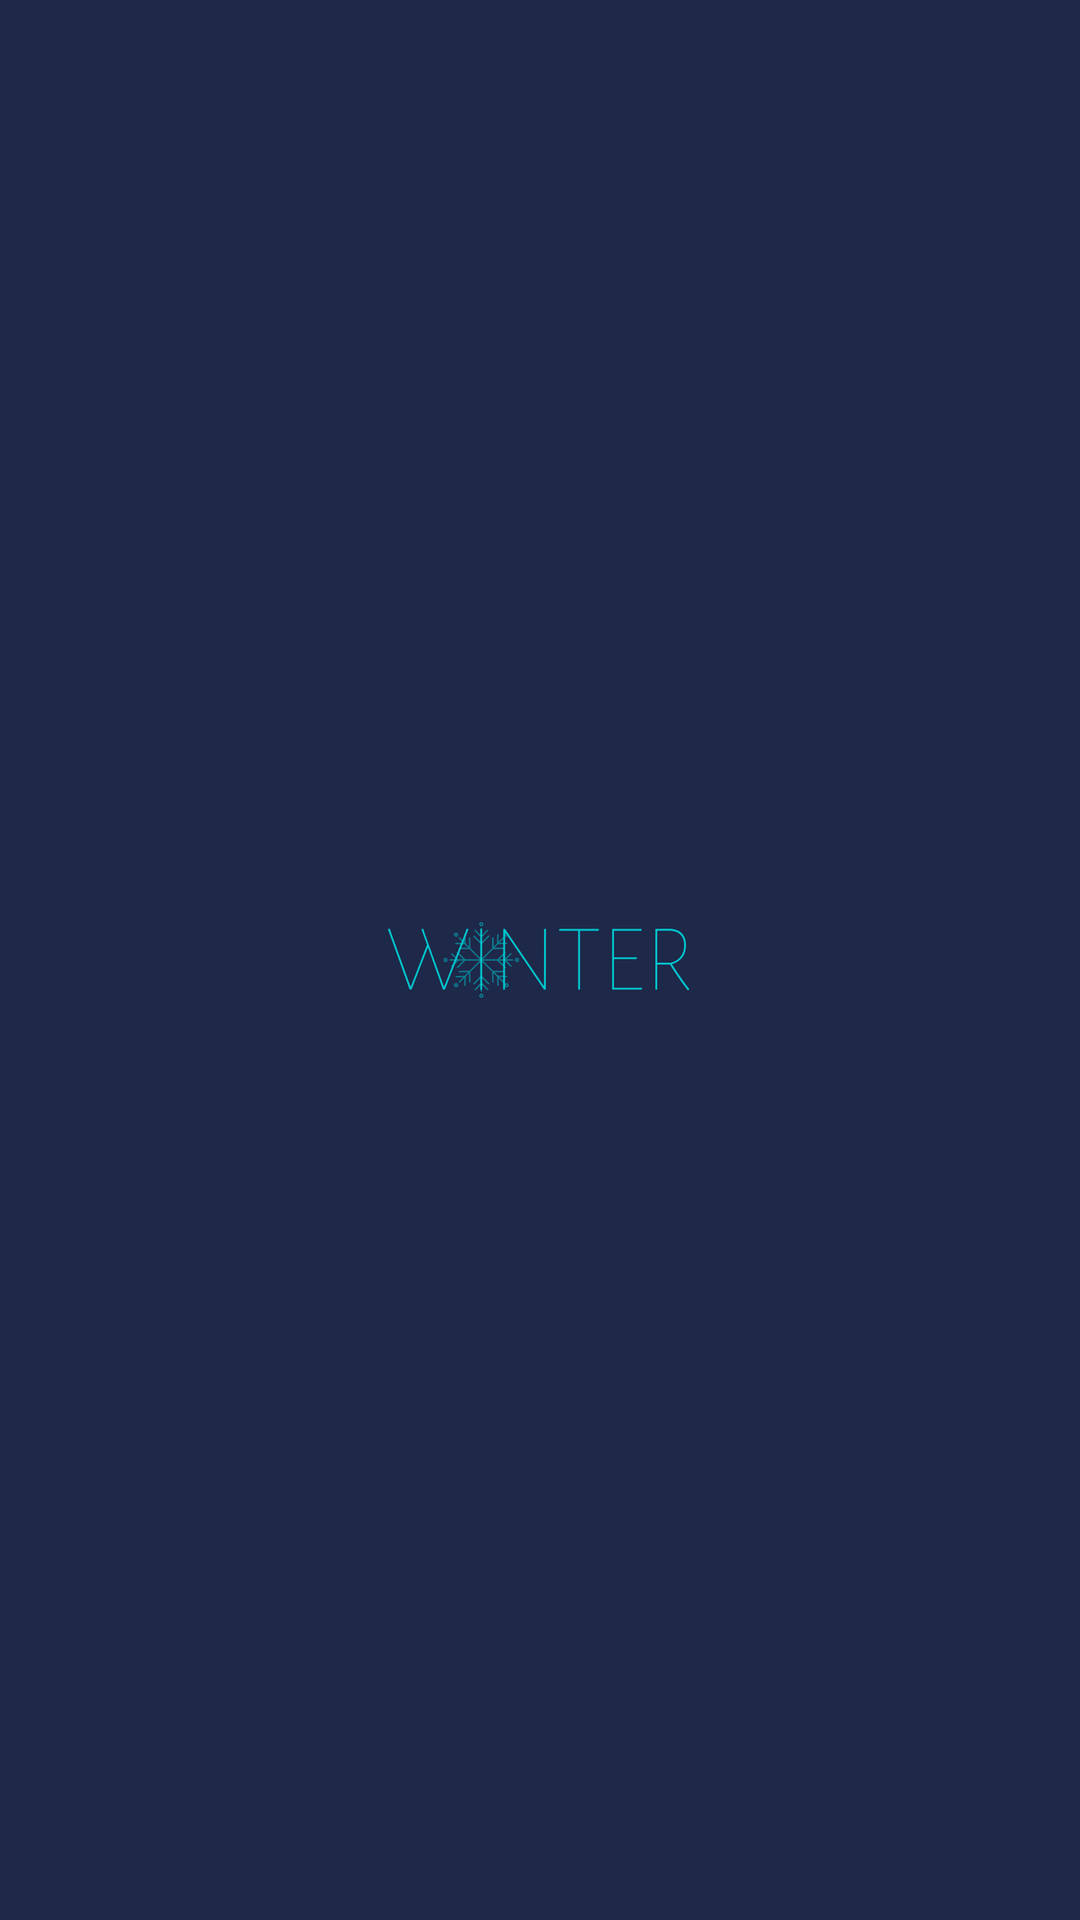 Winter 3240X5760 wallpaper